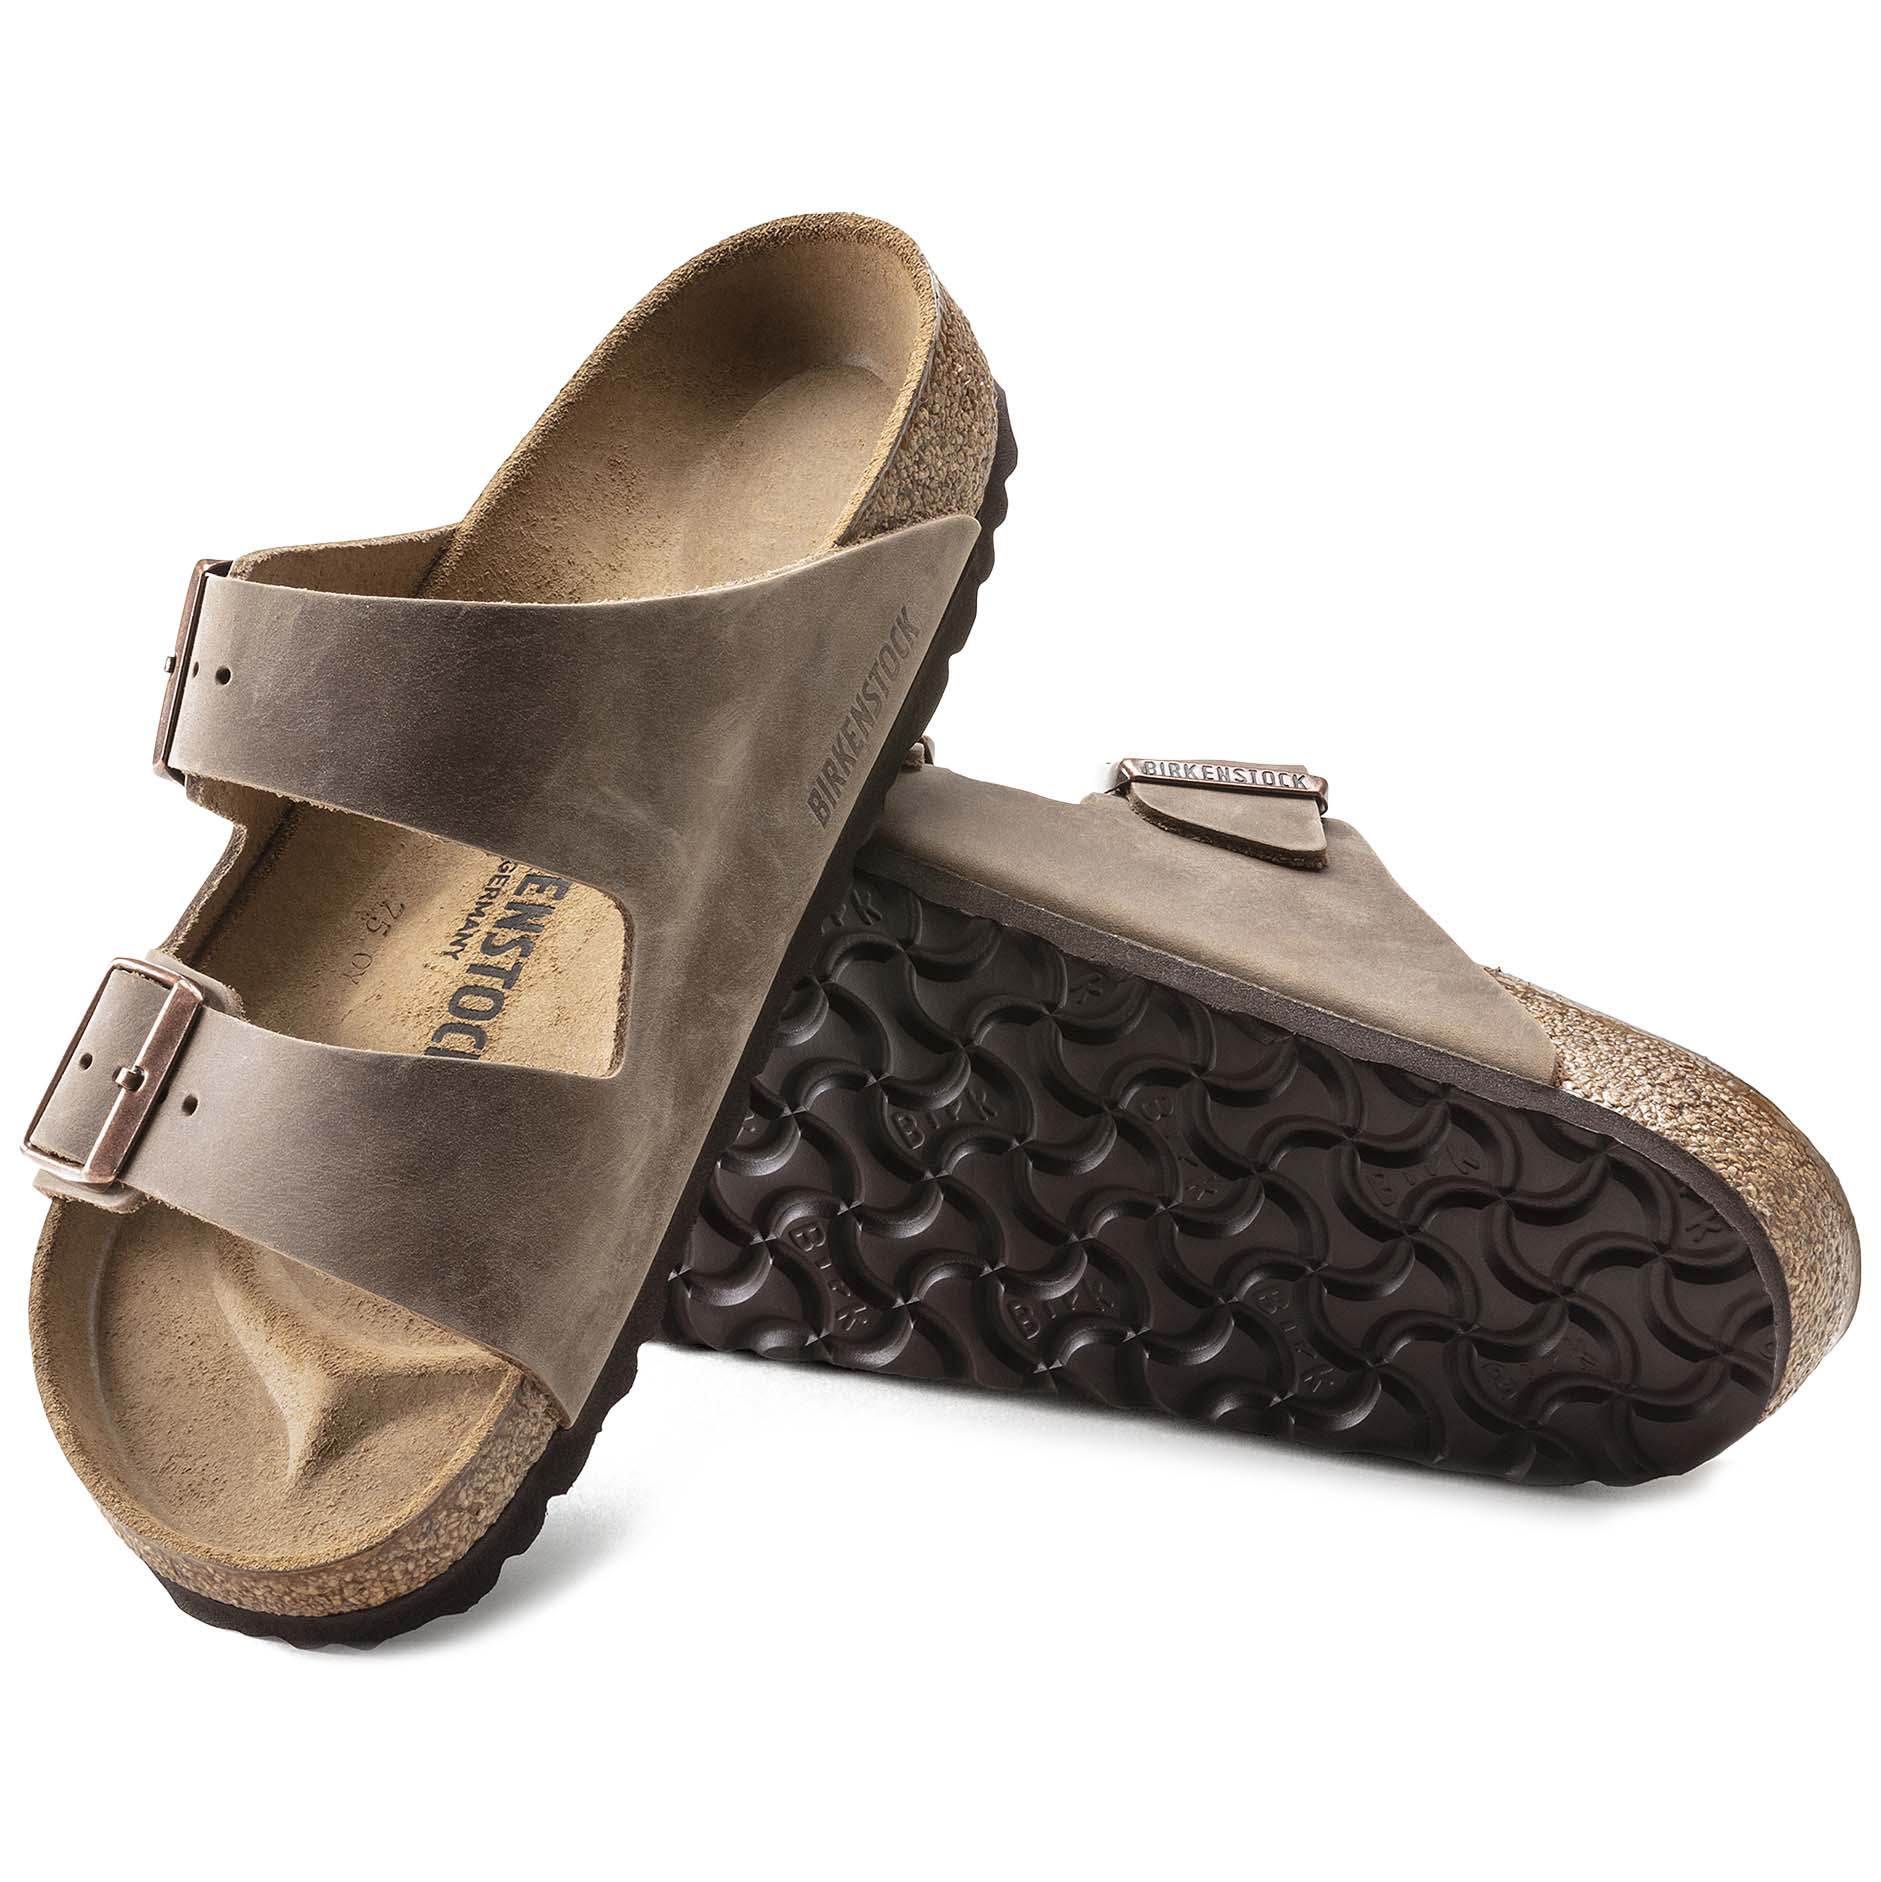 Birkenstock Arizona Oiled Leather Women's Sandals